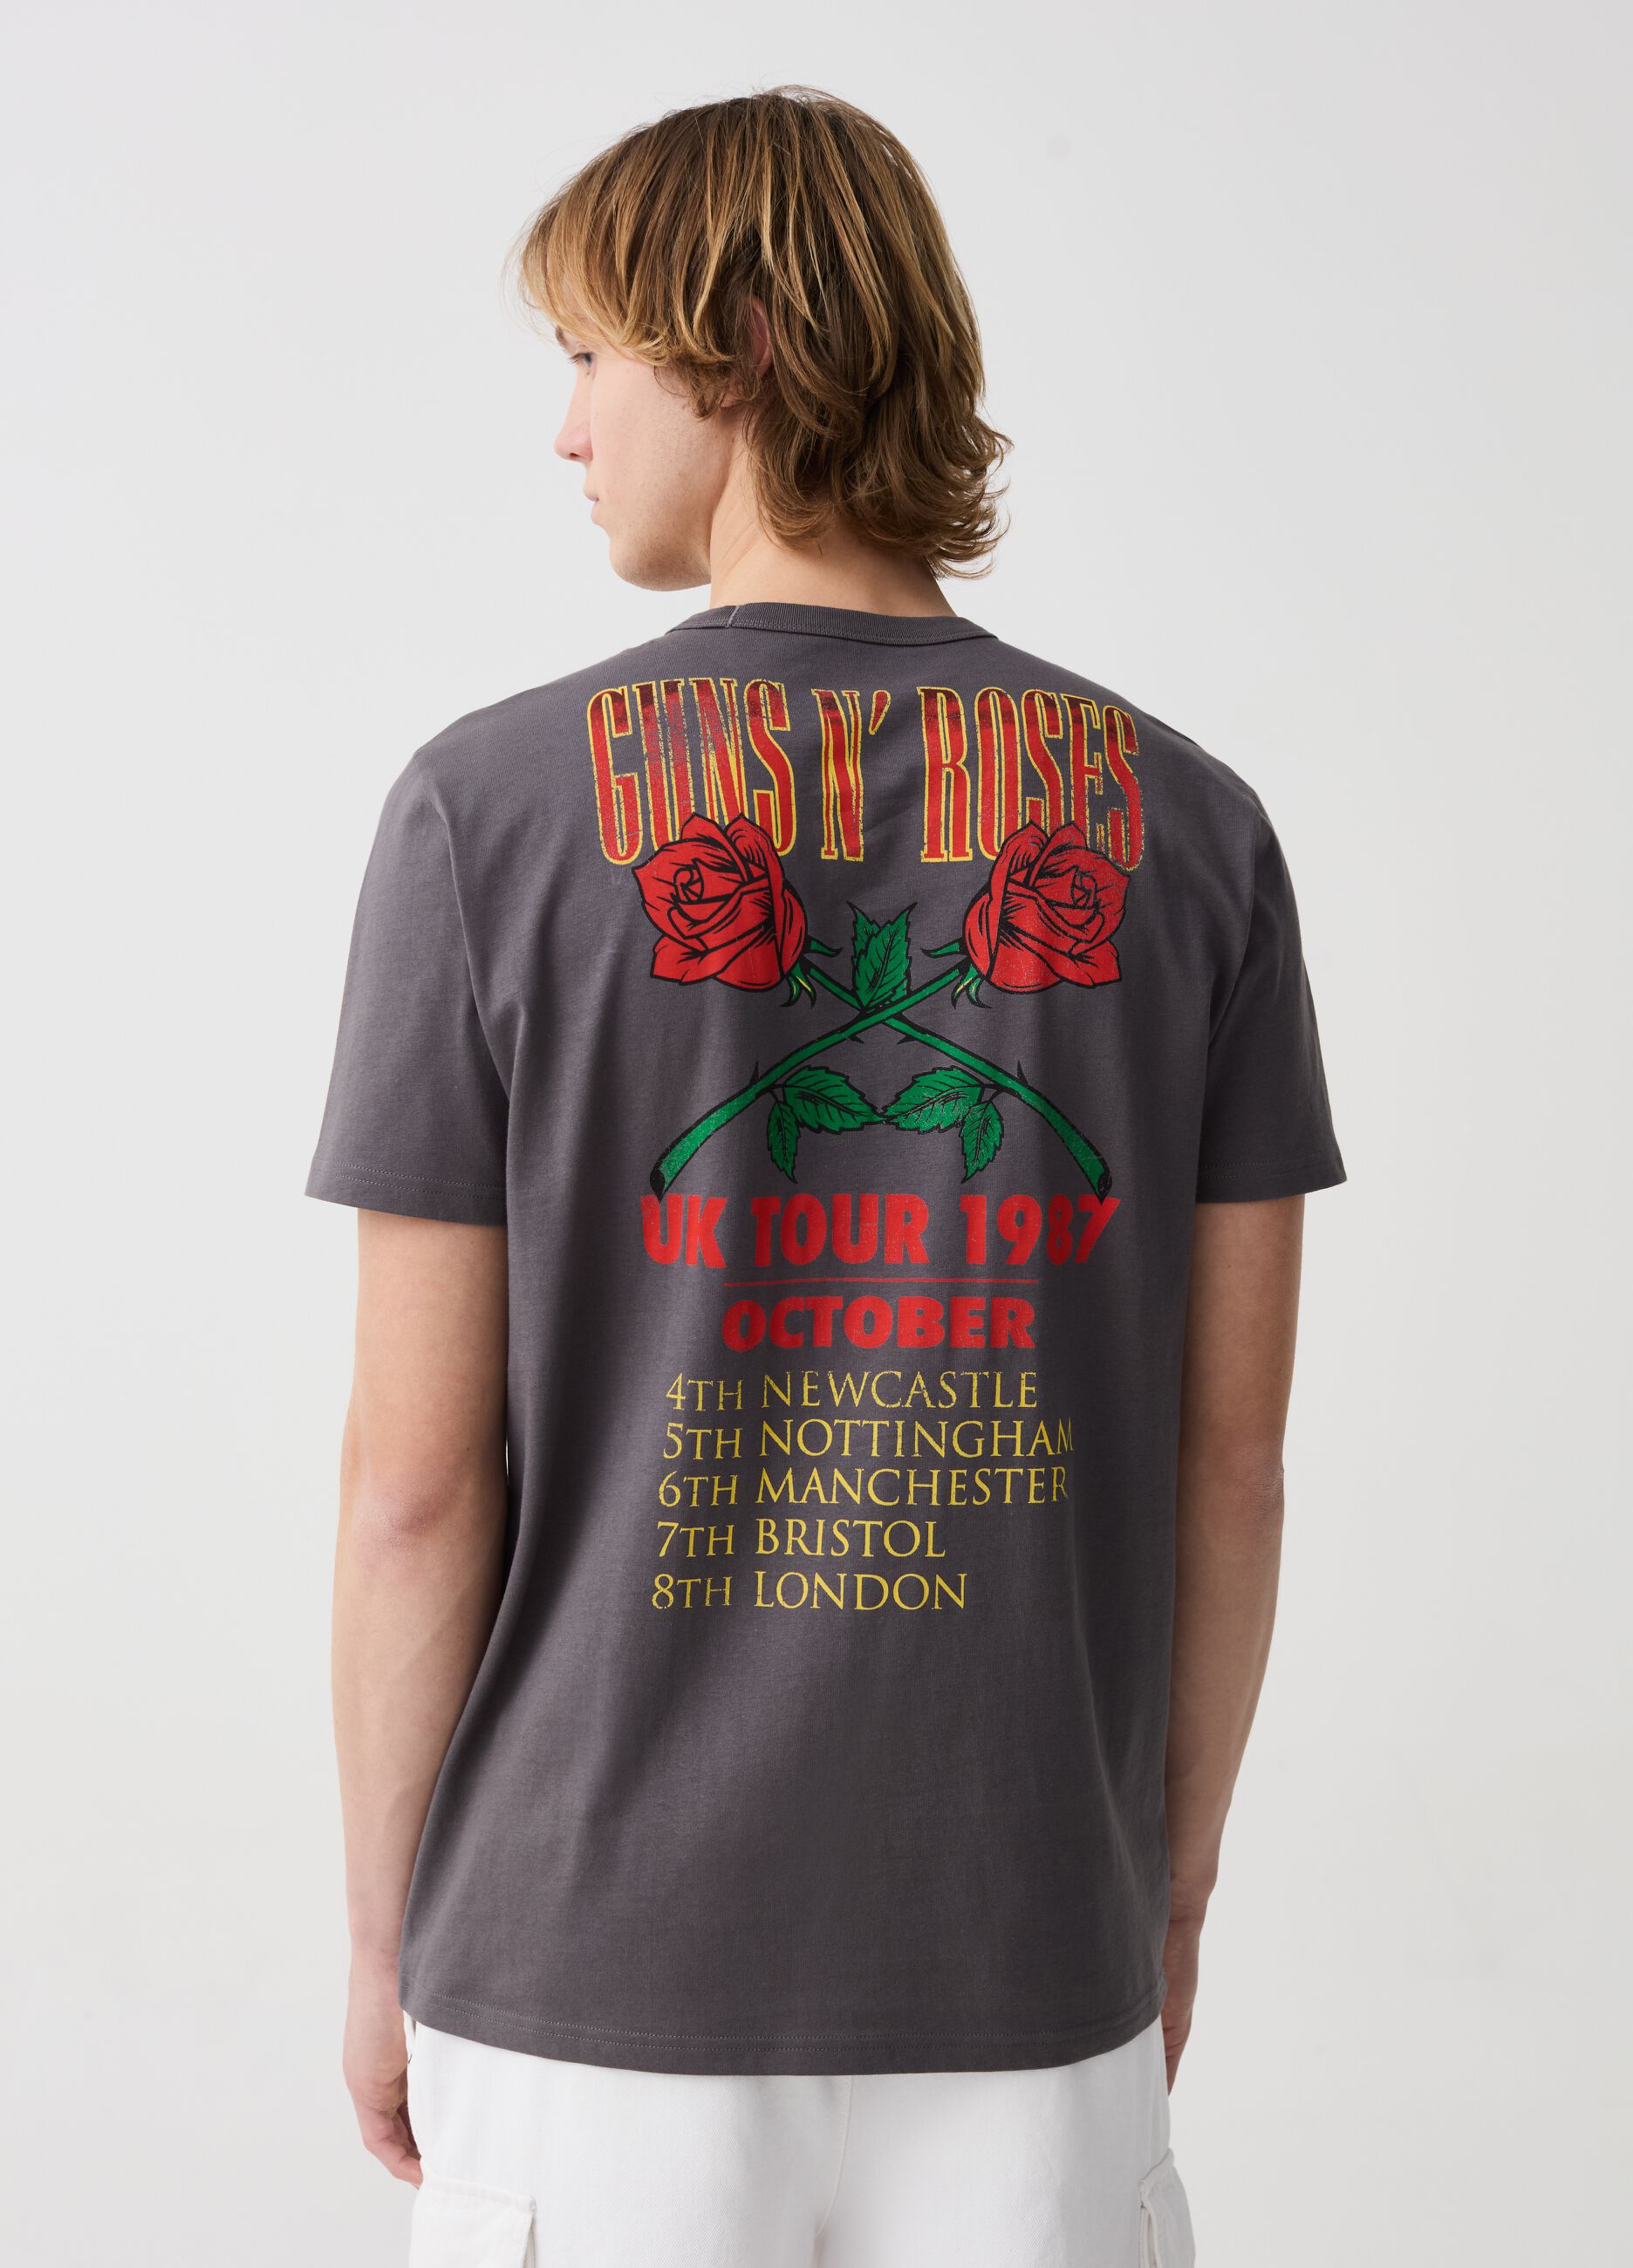 T-shirt with Guns N' Roses print